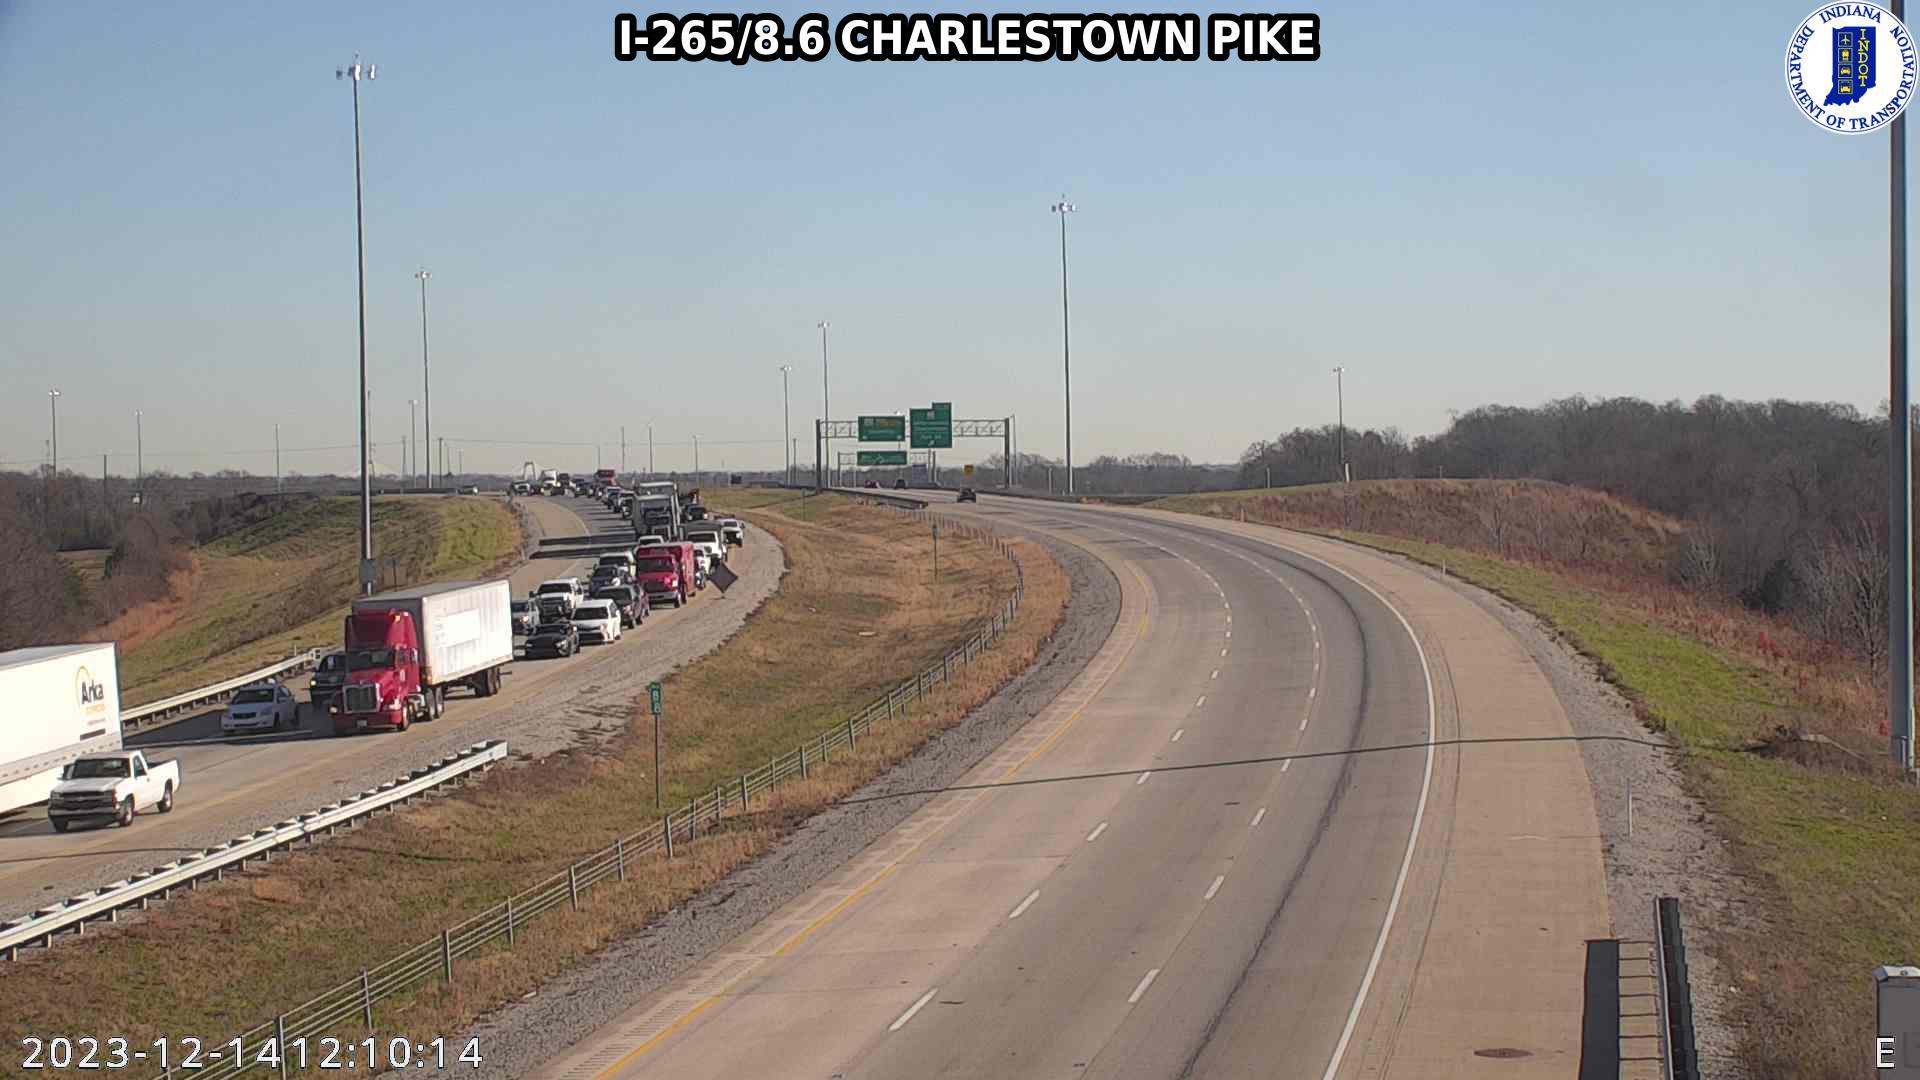 Traffic Cam Watson: I-265: I-265/8.6 CHARLESTOWN PIKE: I-265/8.6 CHARLESTOWN PIKE Player